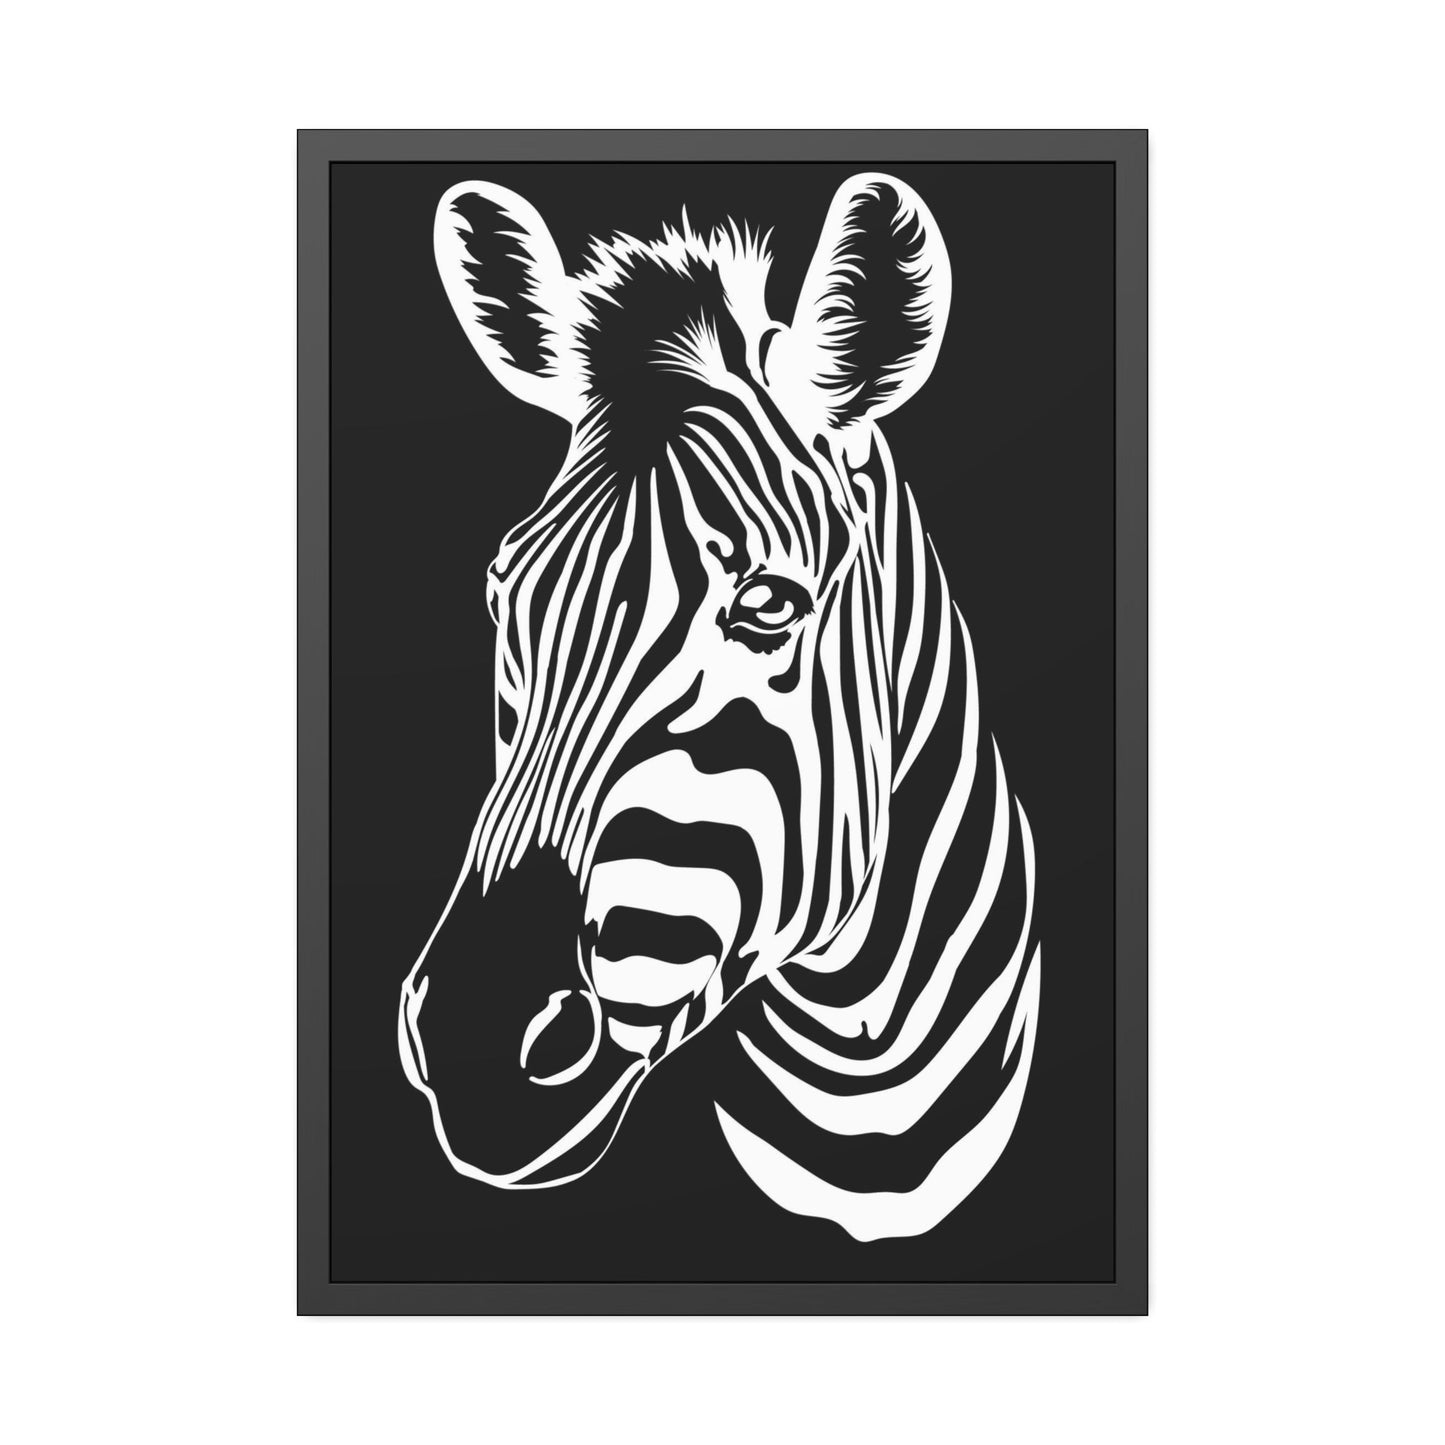 Black and White Wonder: Zebra Print on High-Quality Canvas